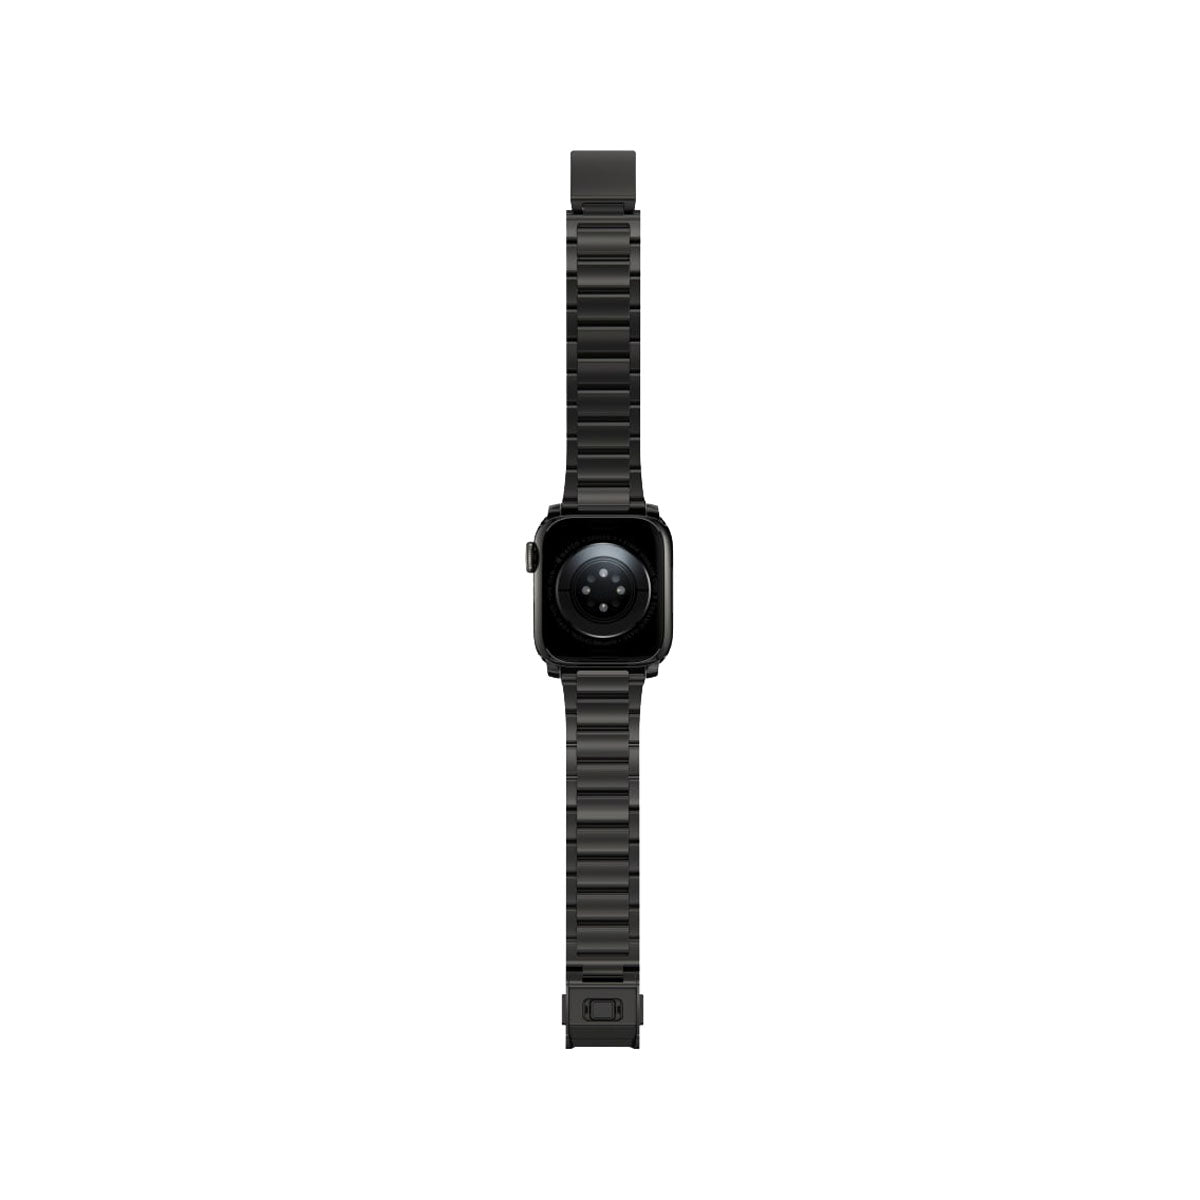 Nomad Apple Watch 41mm Steel Band - Graphite Hardware.